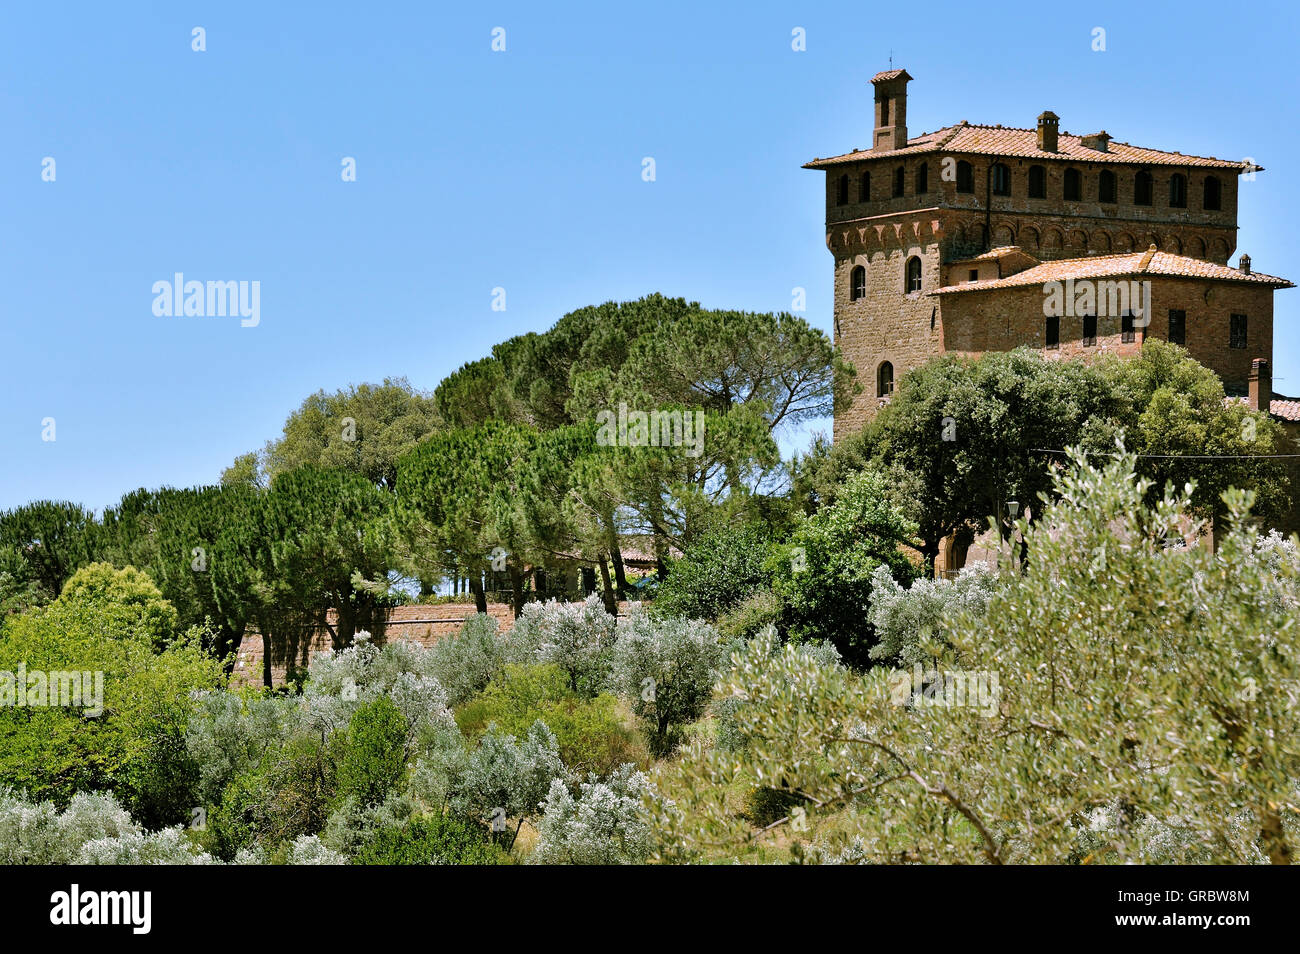 Italienisch-Palast Massaini, Bauernhof-Gebäude in der Nähe von Pienza, Toskana, Italien Stockfoto